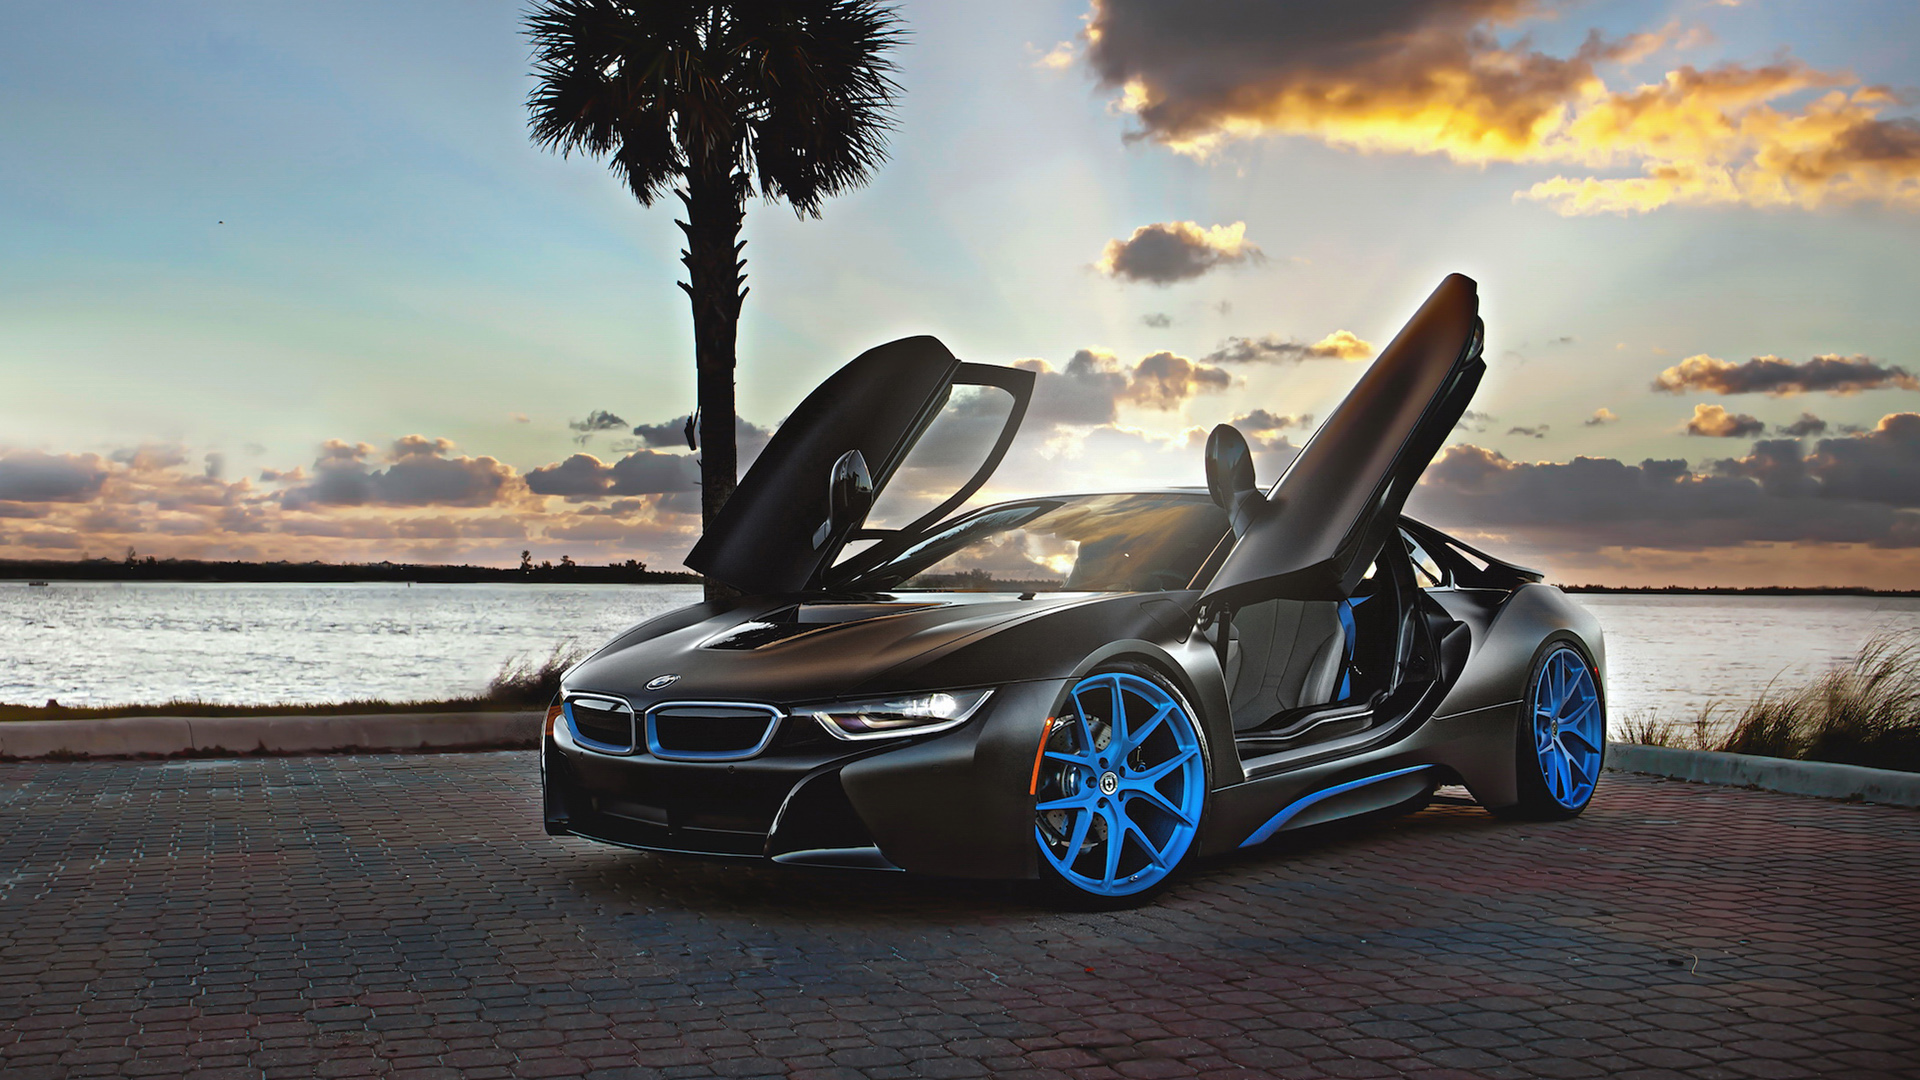 BMW i8 Blue HRE Wheels Wallpaper | HD Car Wallpapers | ID ...